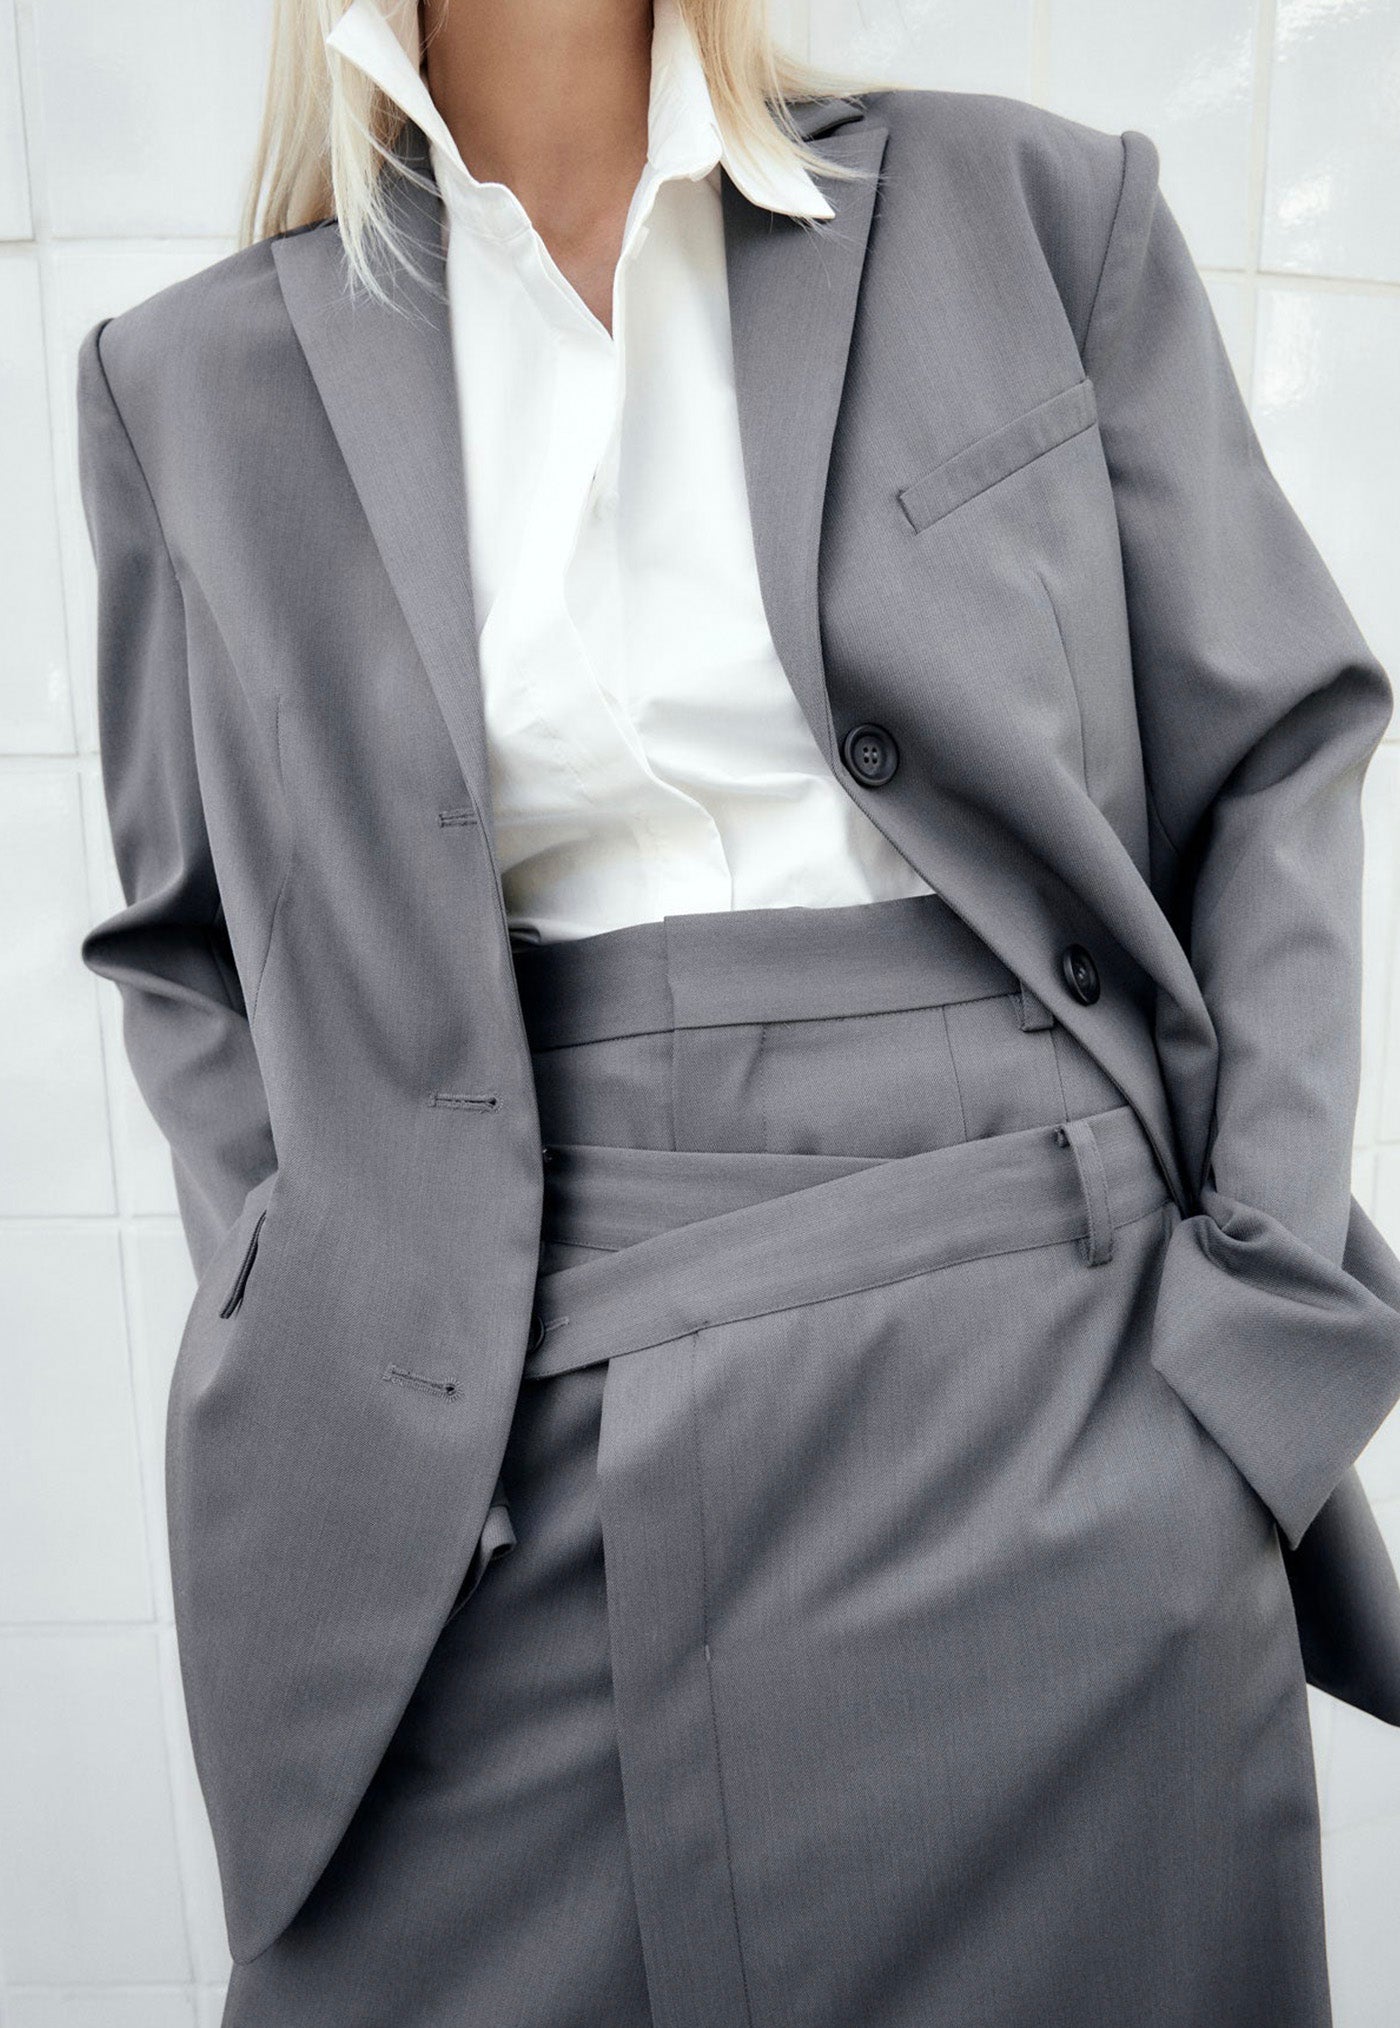 Homme Belted Blazer - Pewter Grey sold by Angel Divine